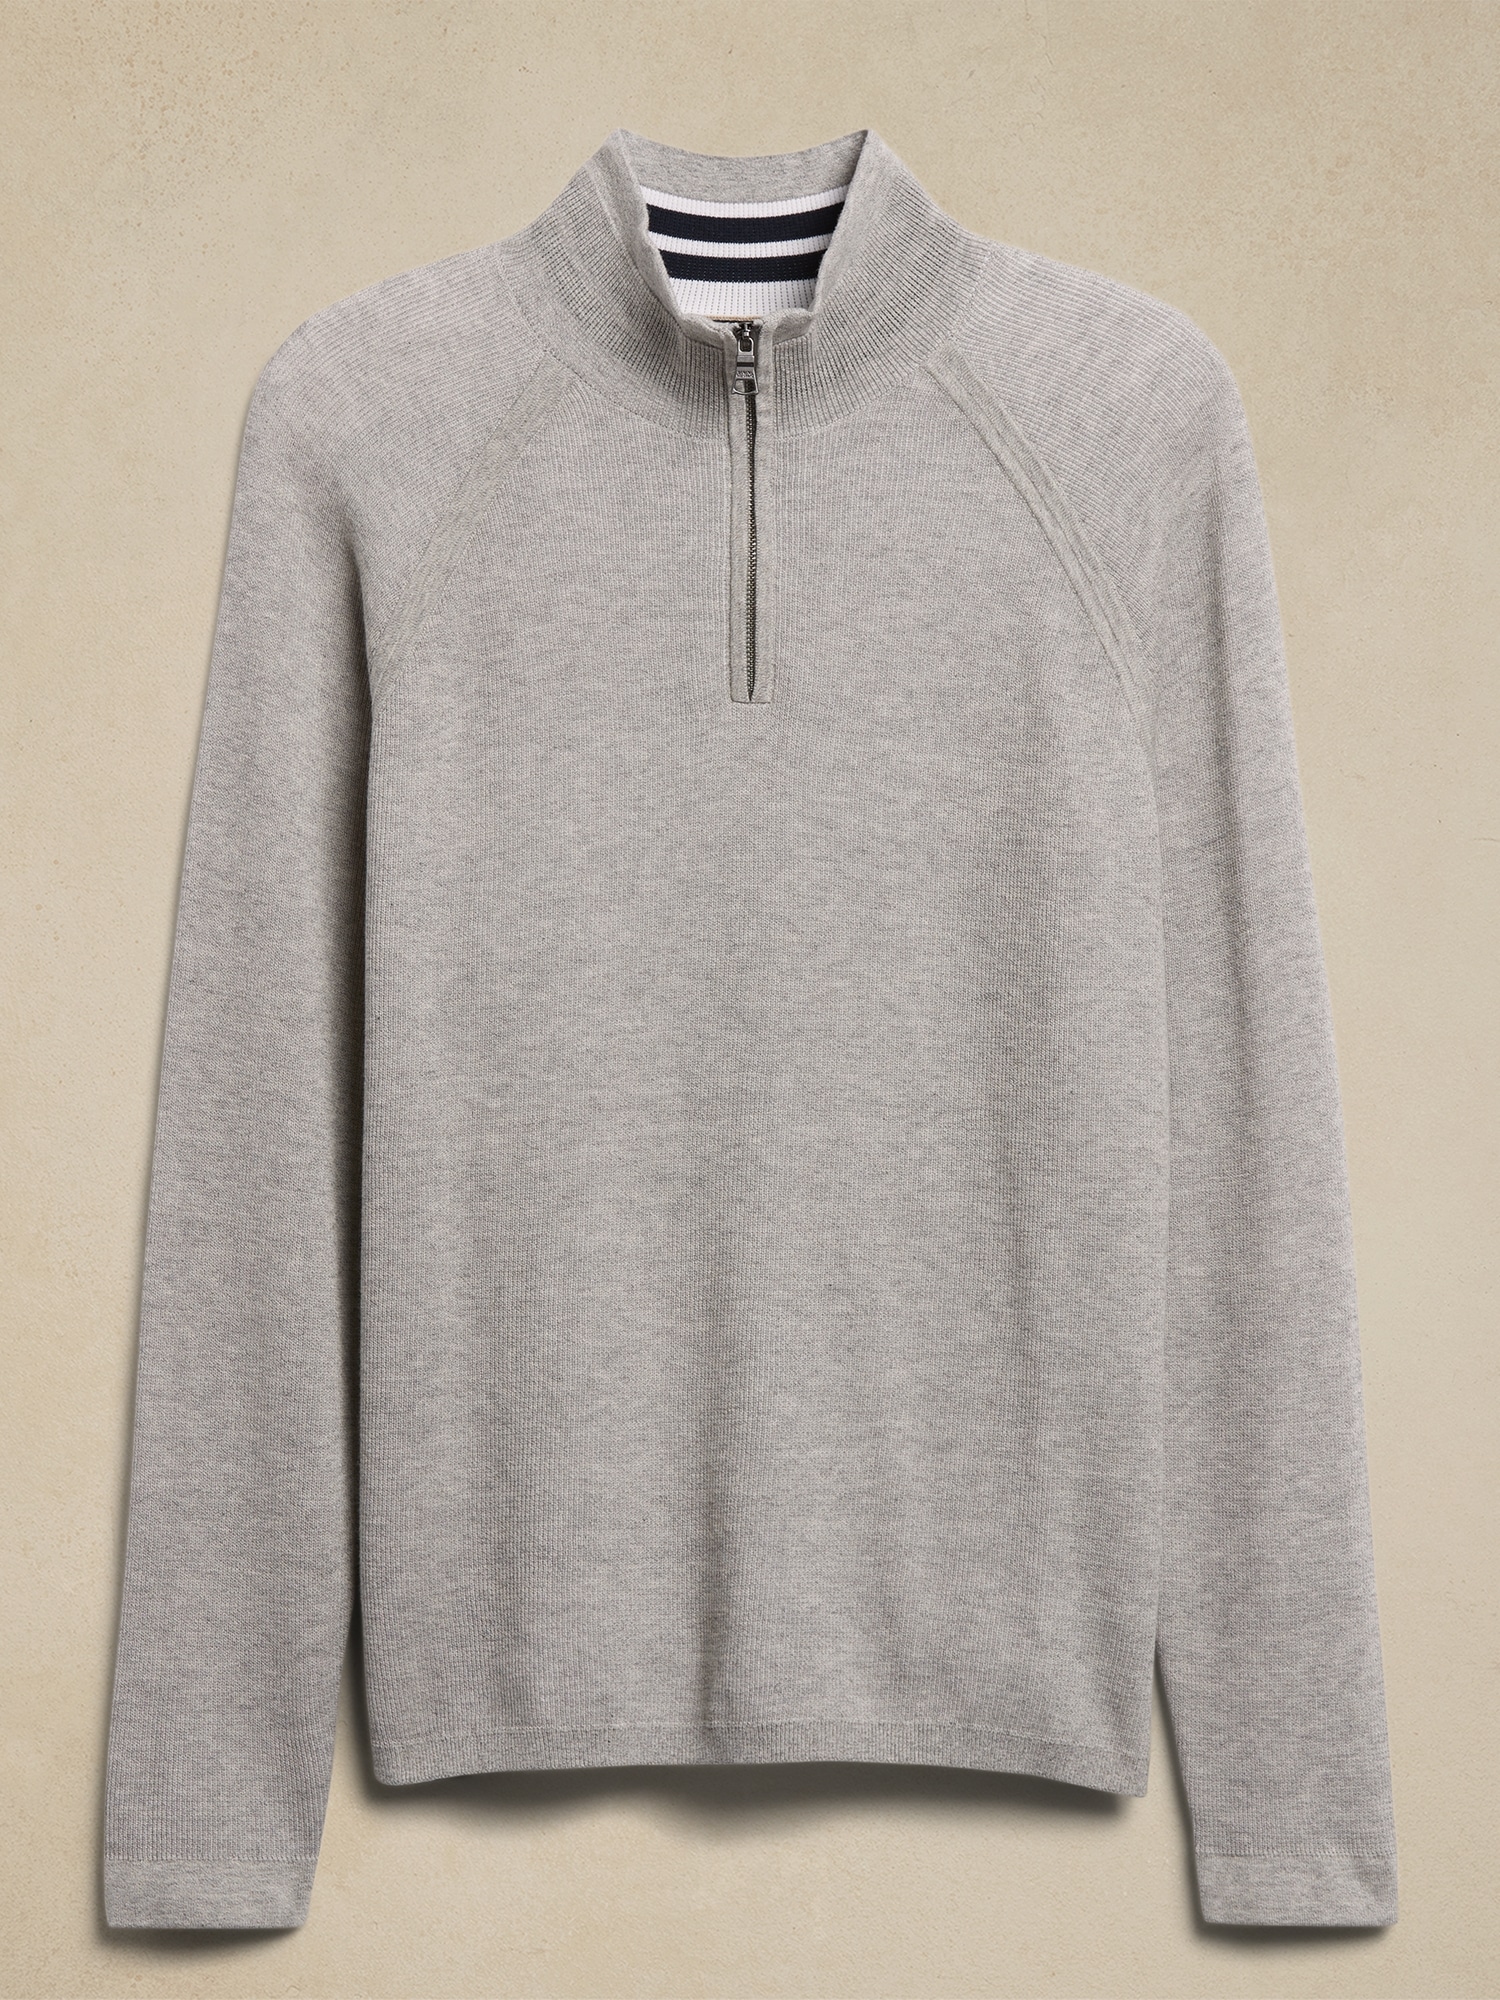 Men's large BANANA REPUBLIC 1/4 zip pullover long sleeve sweater cotton  blend - www.vitorcorrea.com